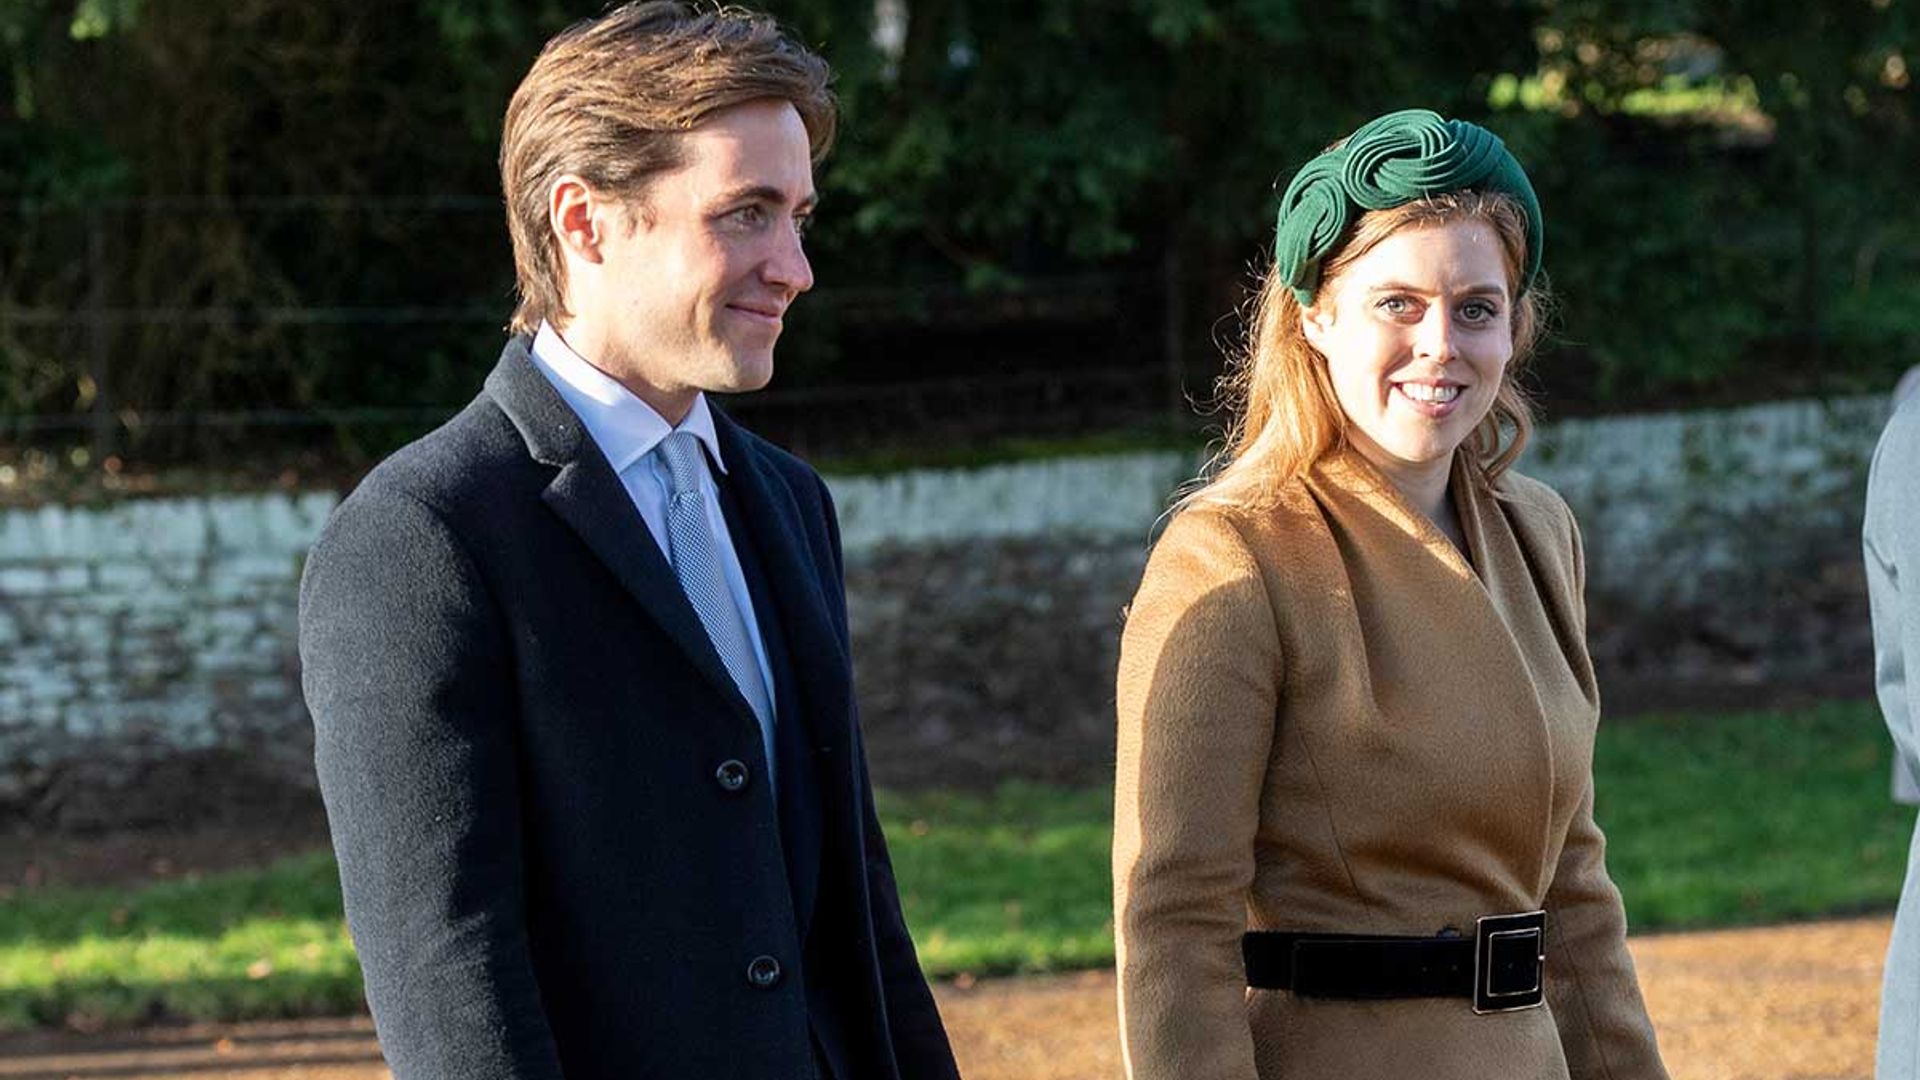 ITV makes surprising announcement about Princess Beatrice and Edoardo Mapelli's wedding